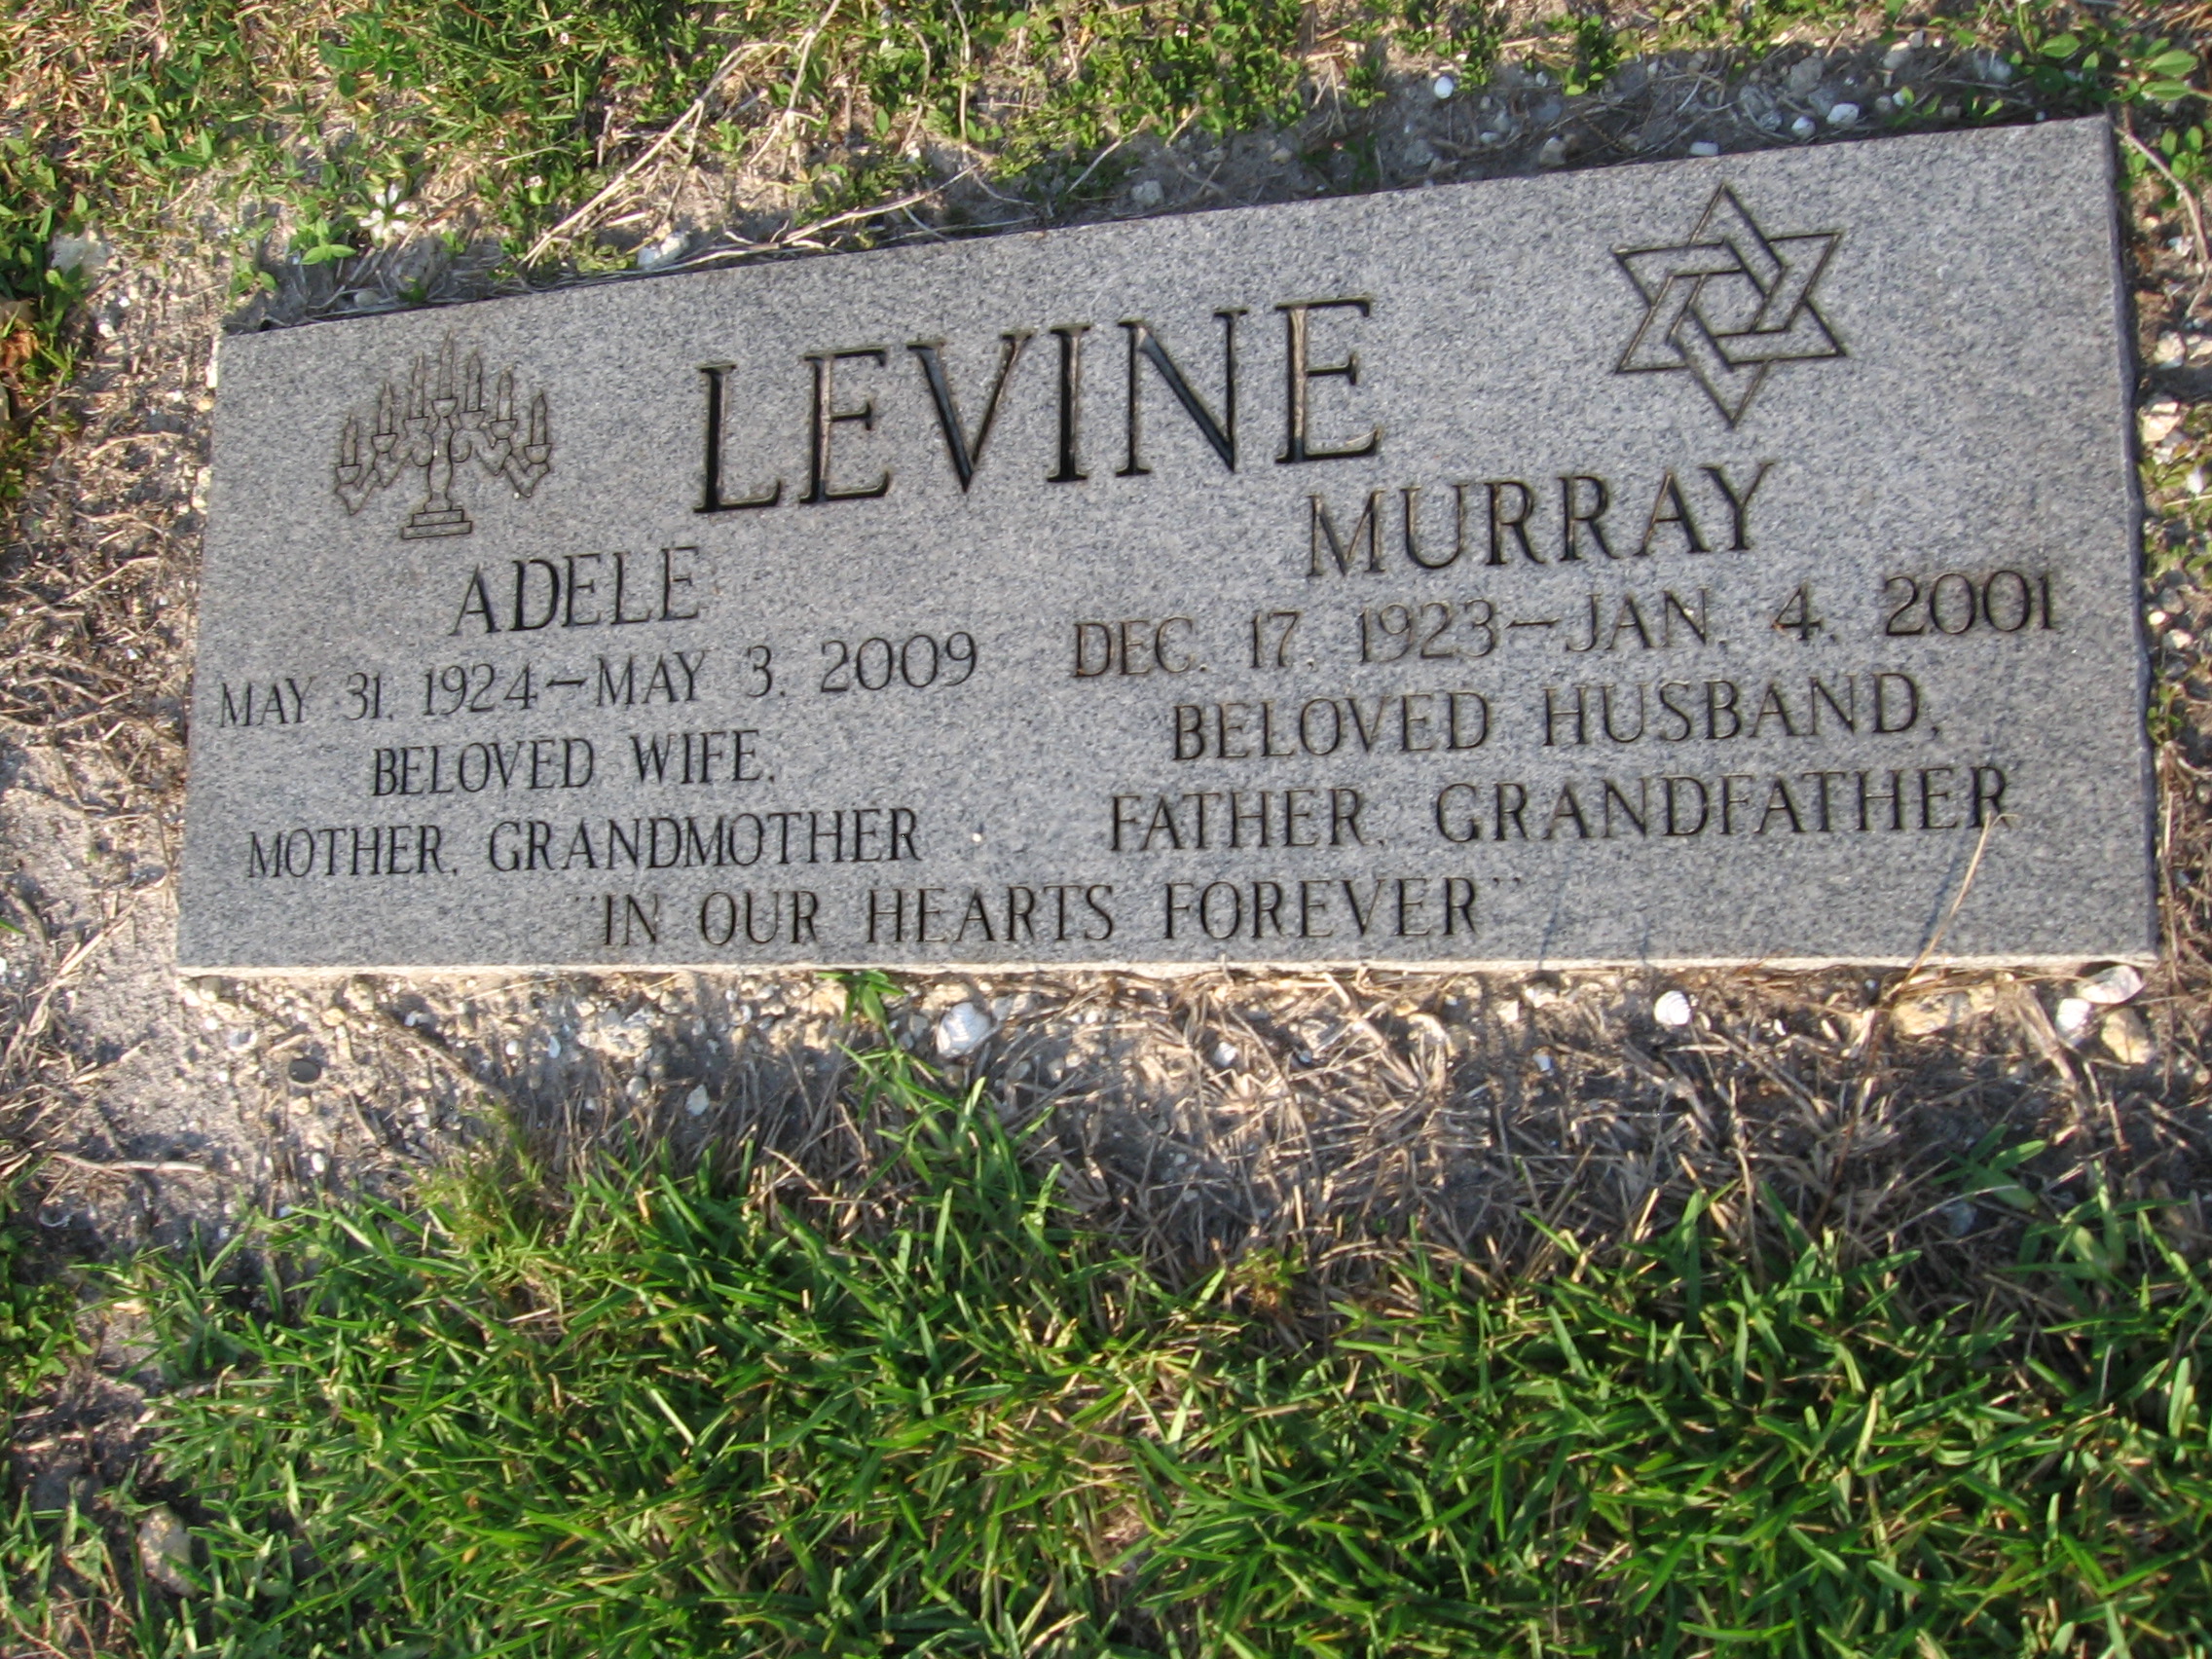 Adele Levine